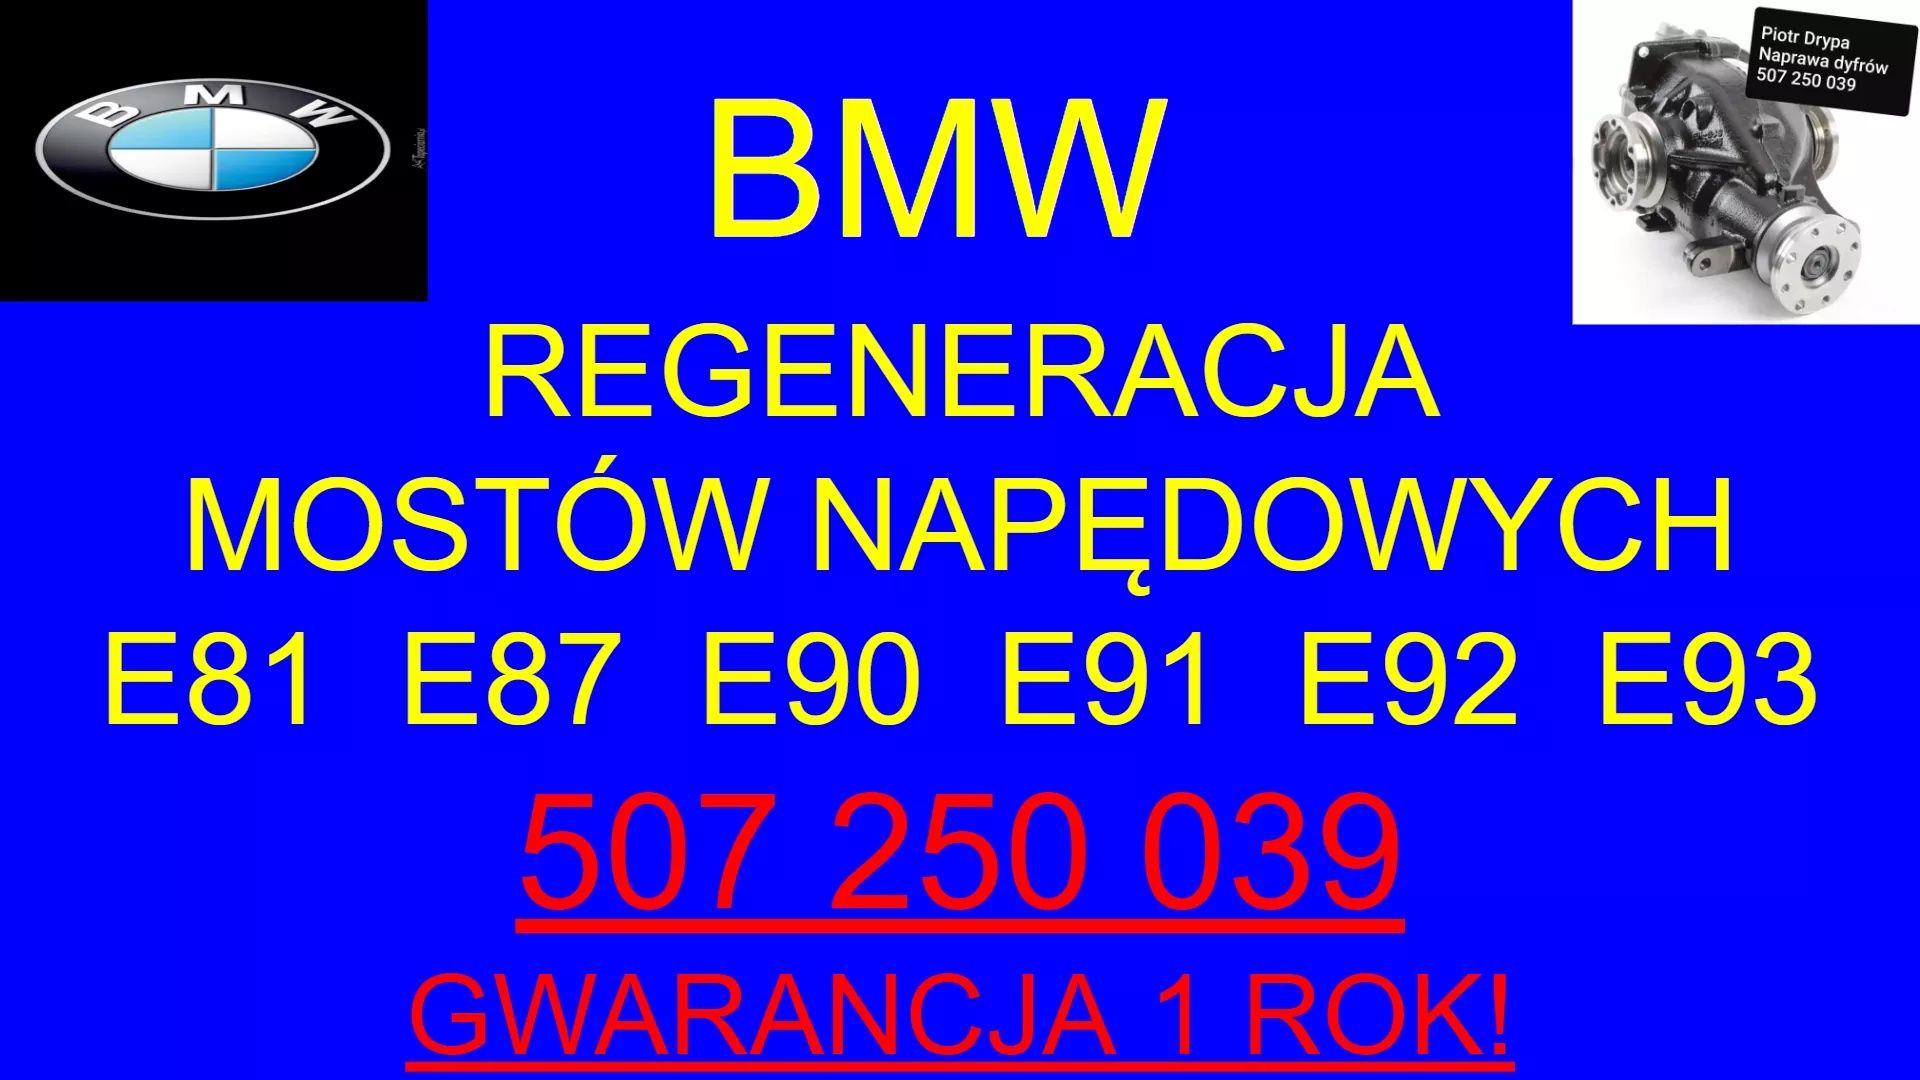 Mosty napędowe dyfry  naprawa regeneracja BMW E81 E87 E90 E91 E92 E93